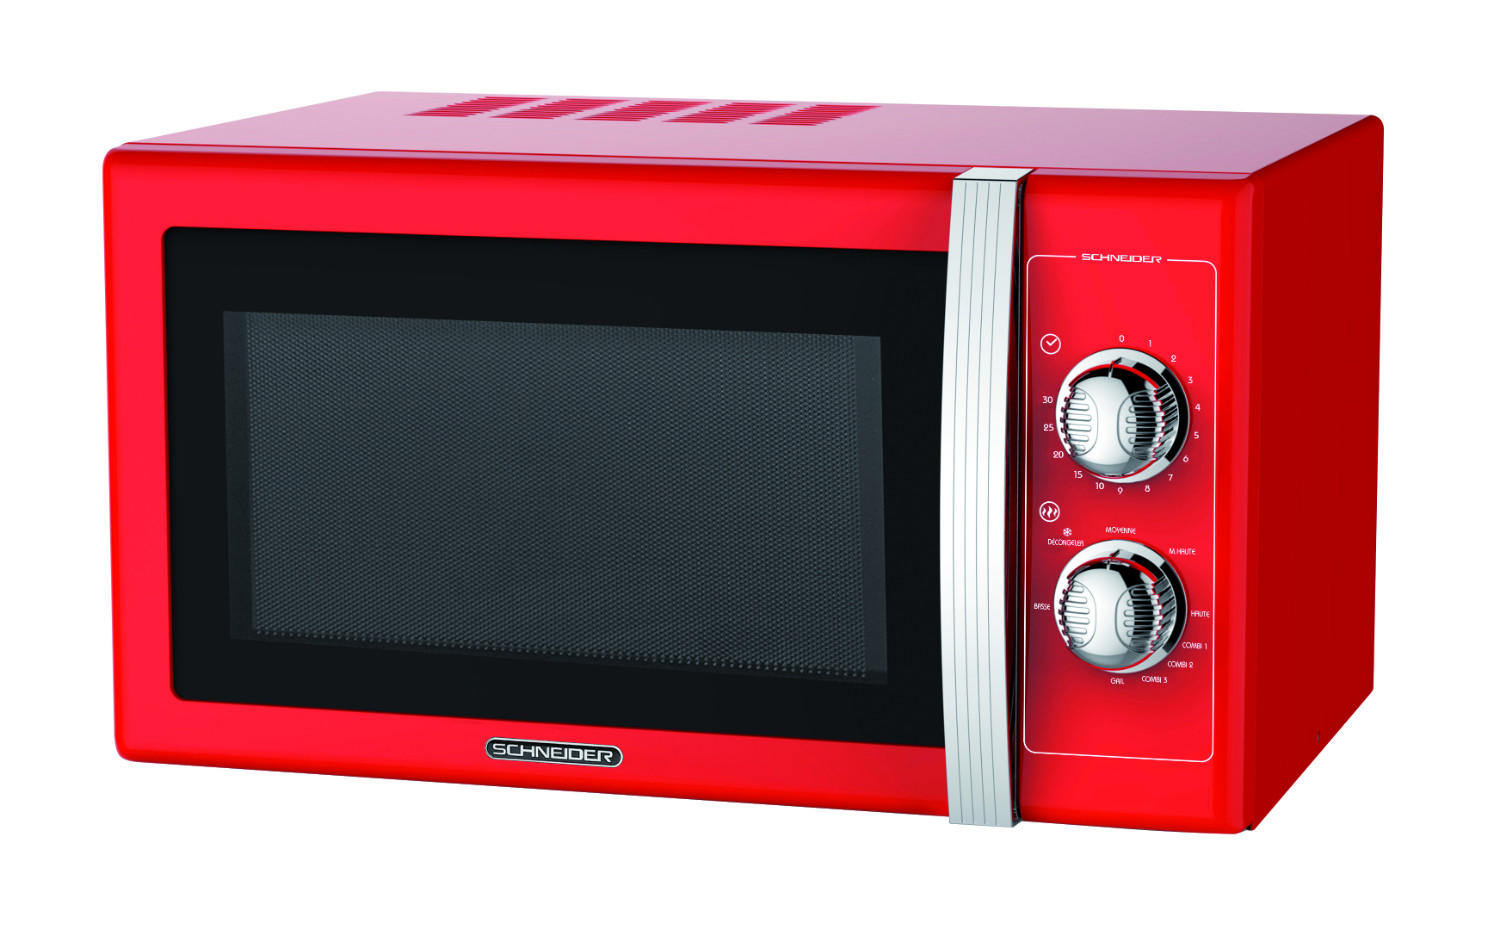 Vintage red microwave oven 20L - Schneider